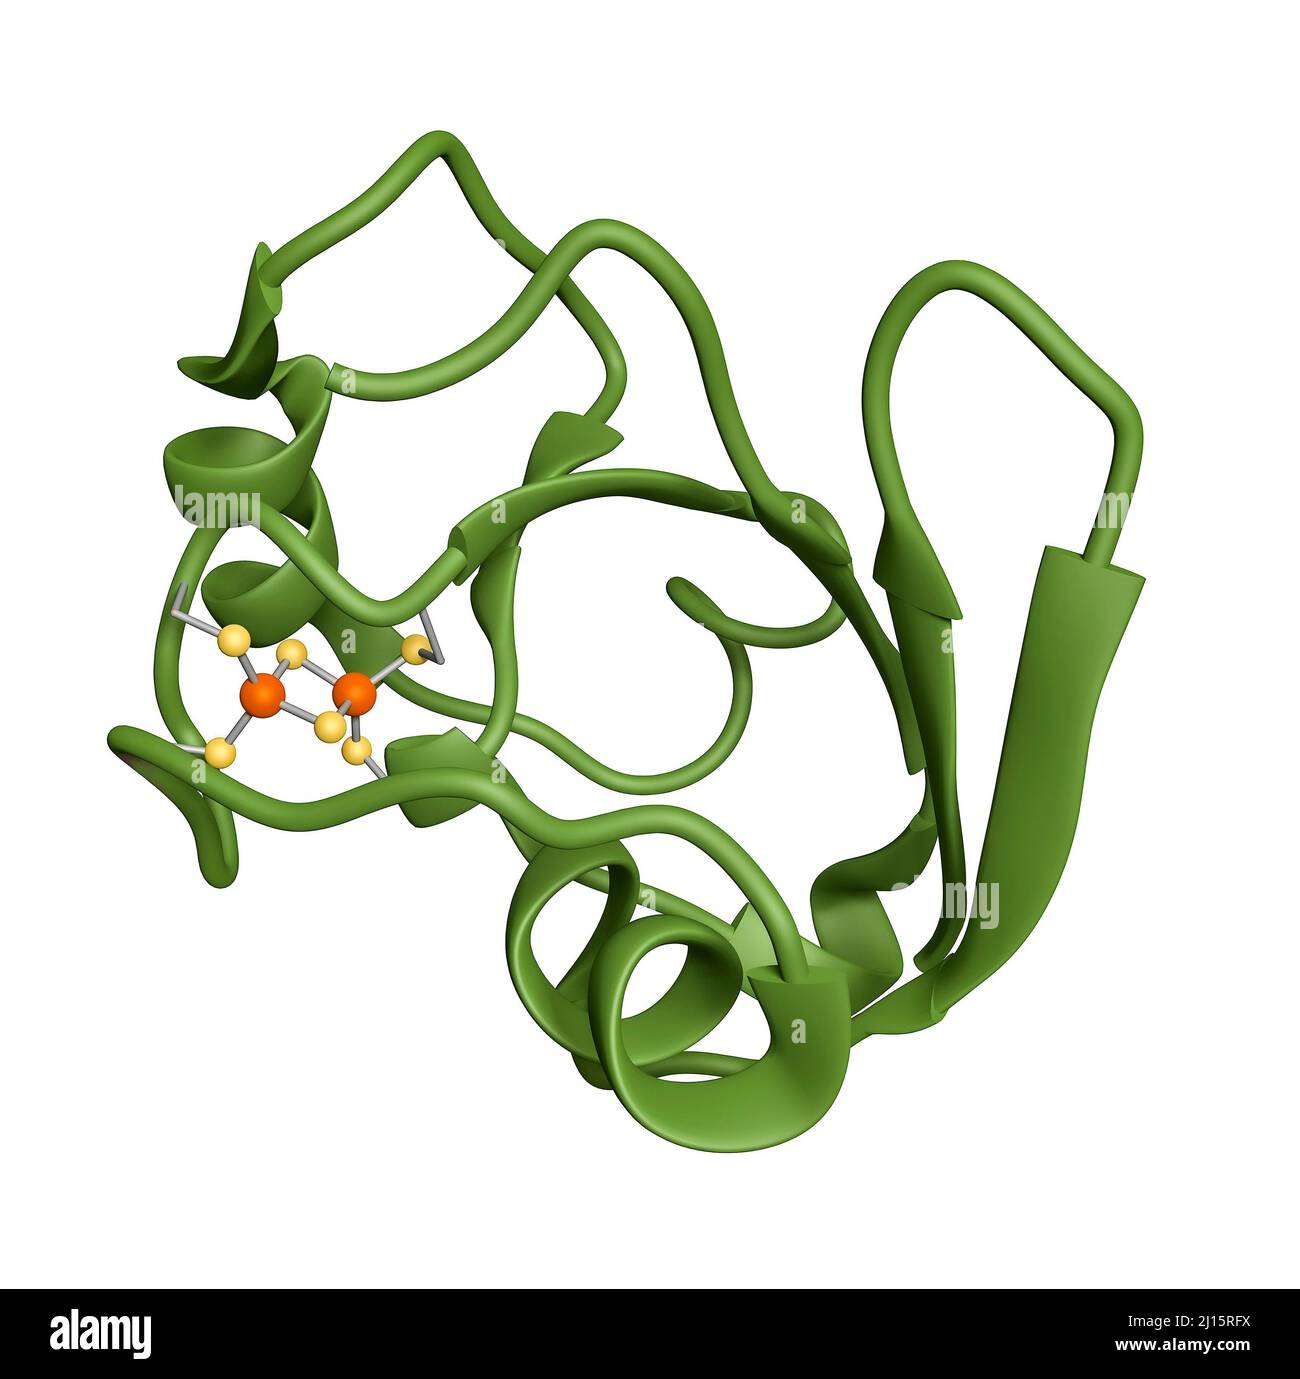 2Fe-2S ferredoxin core, molecular model Stock Photo